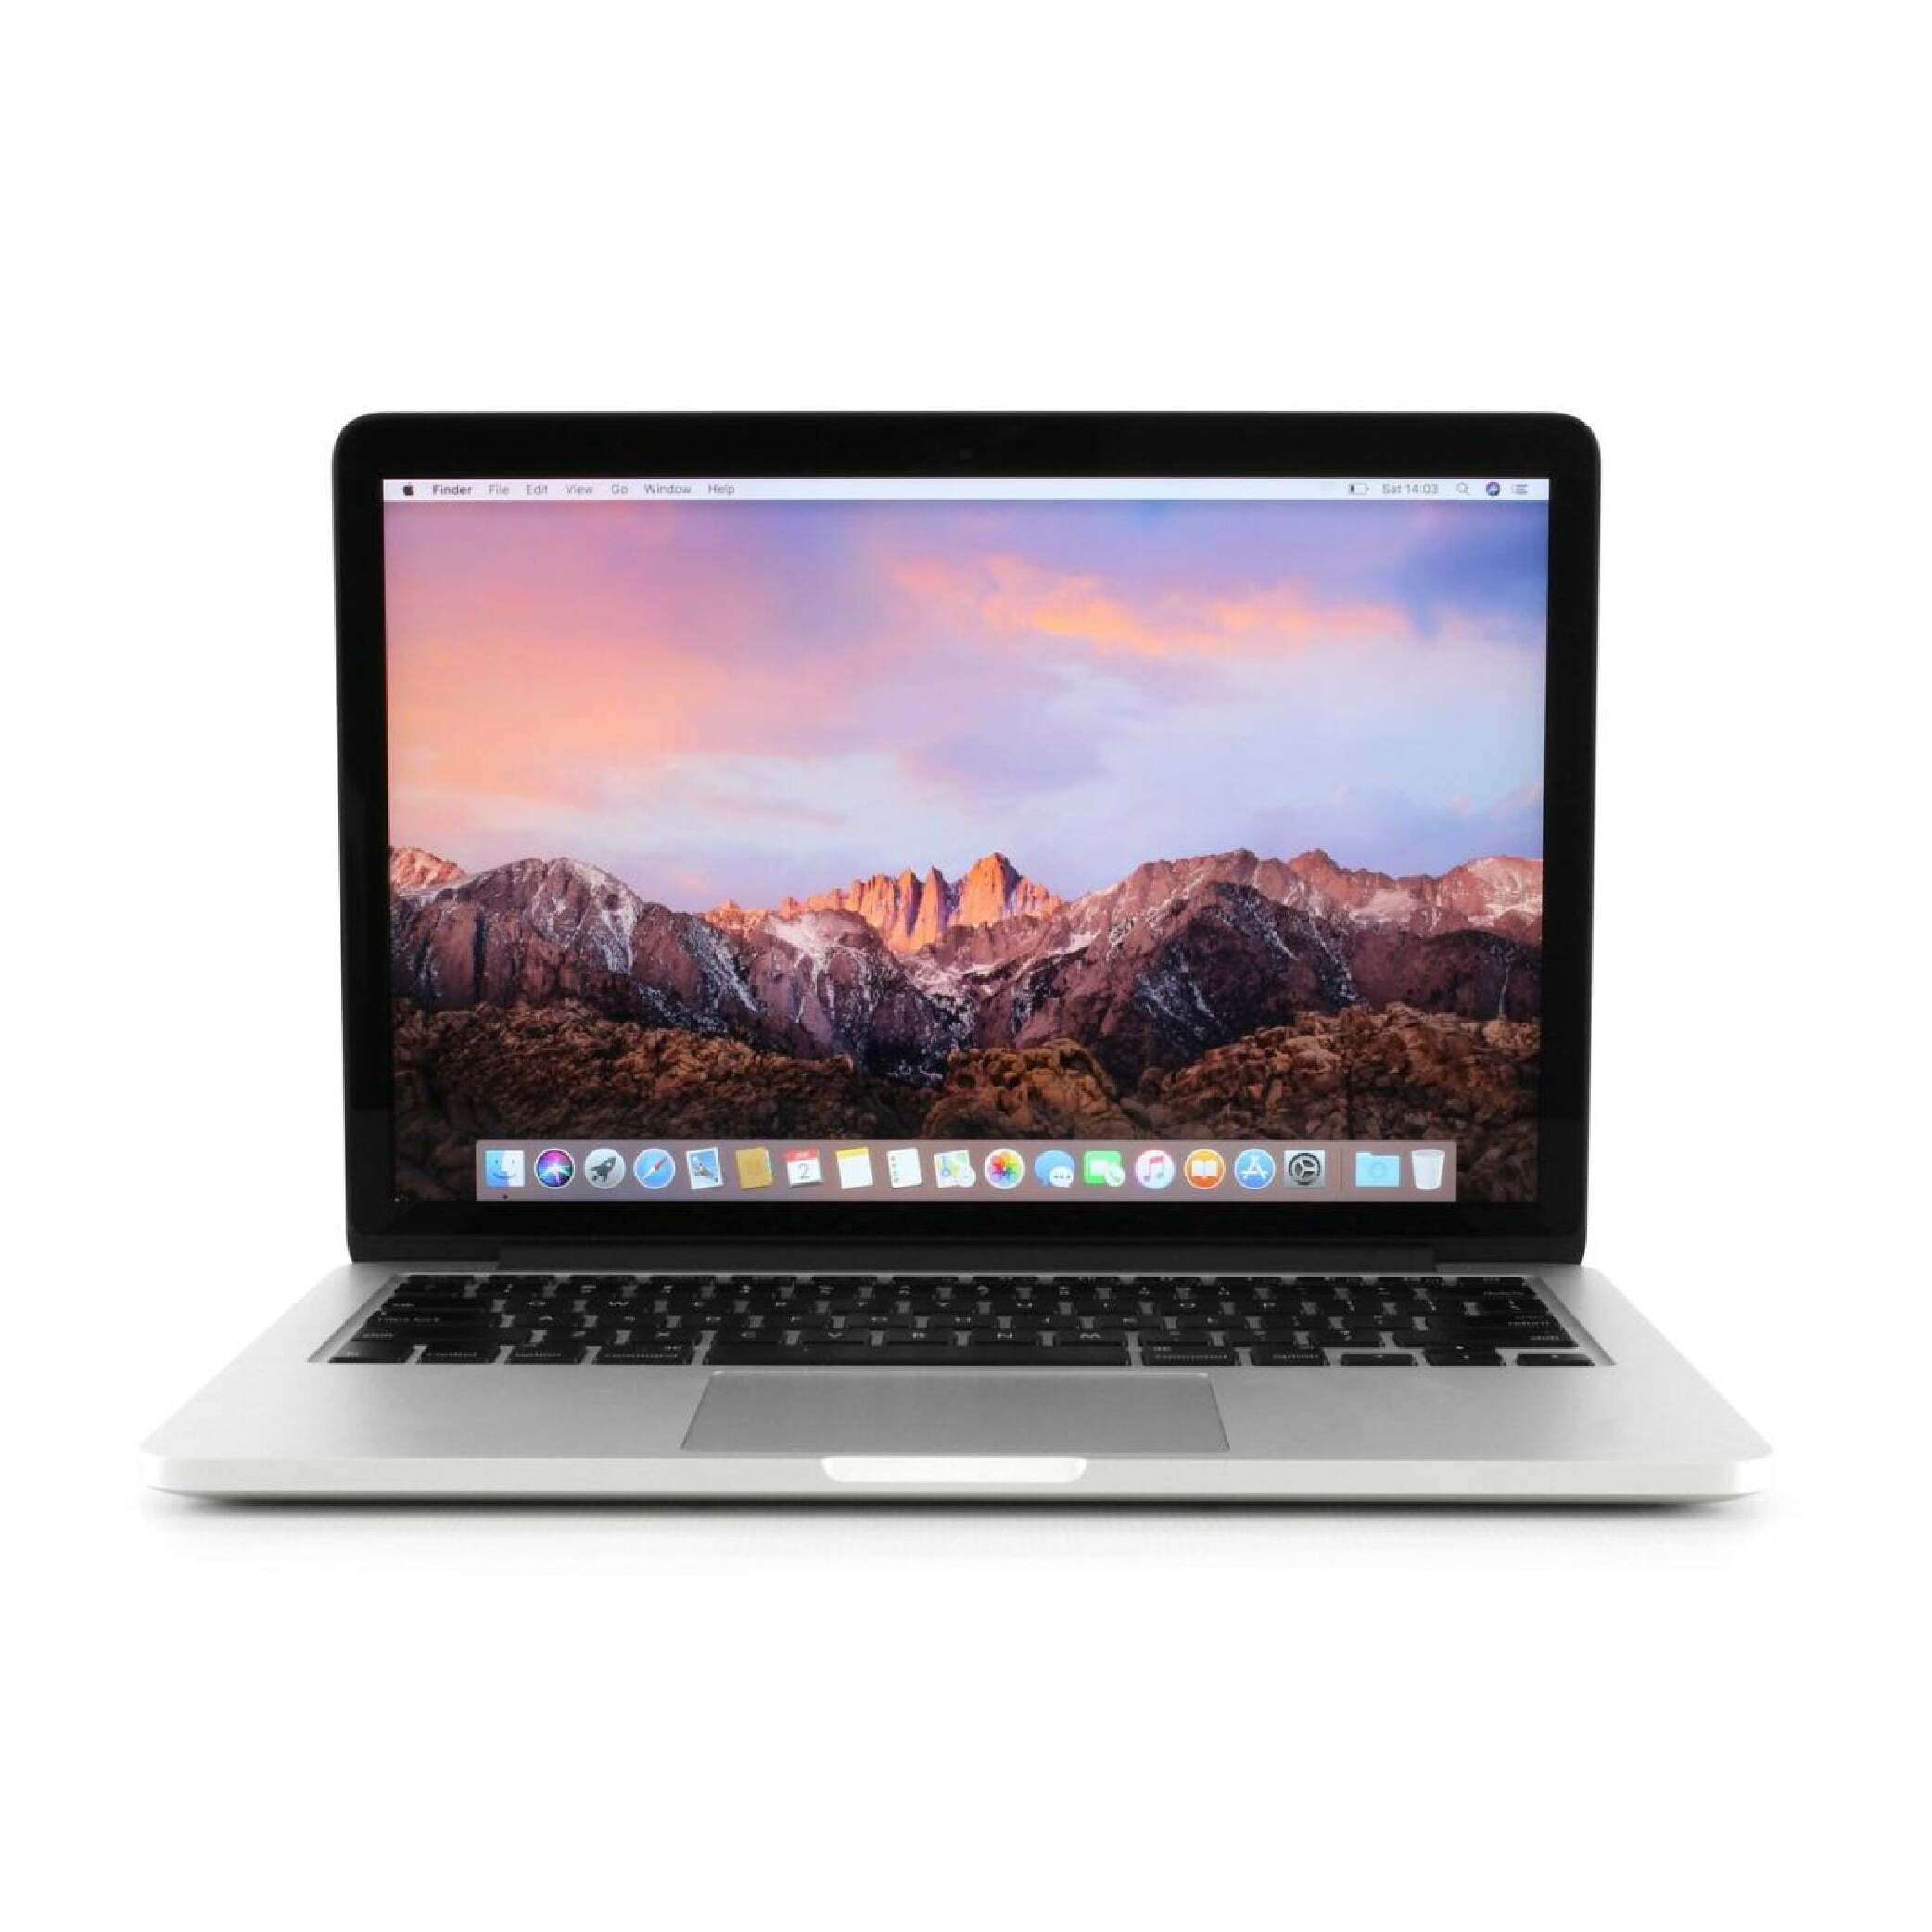 Macbook Pro 2015 - Core i7, 16GB RAM, 512GB SSD